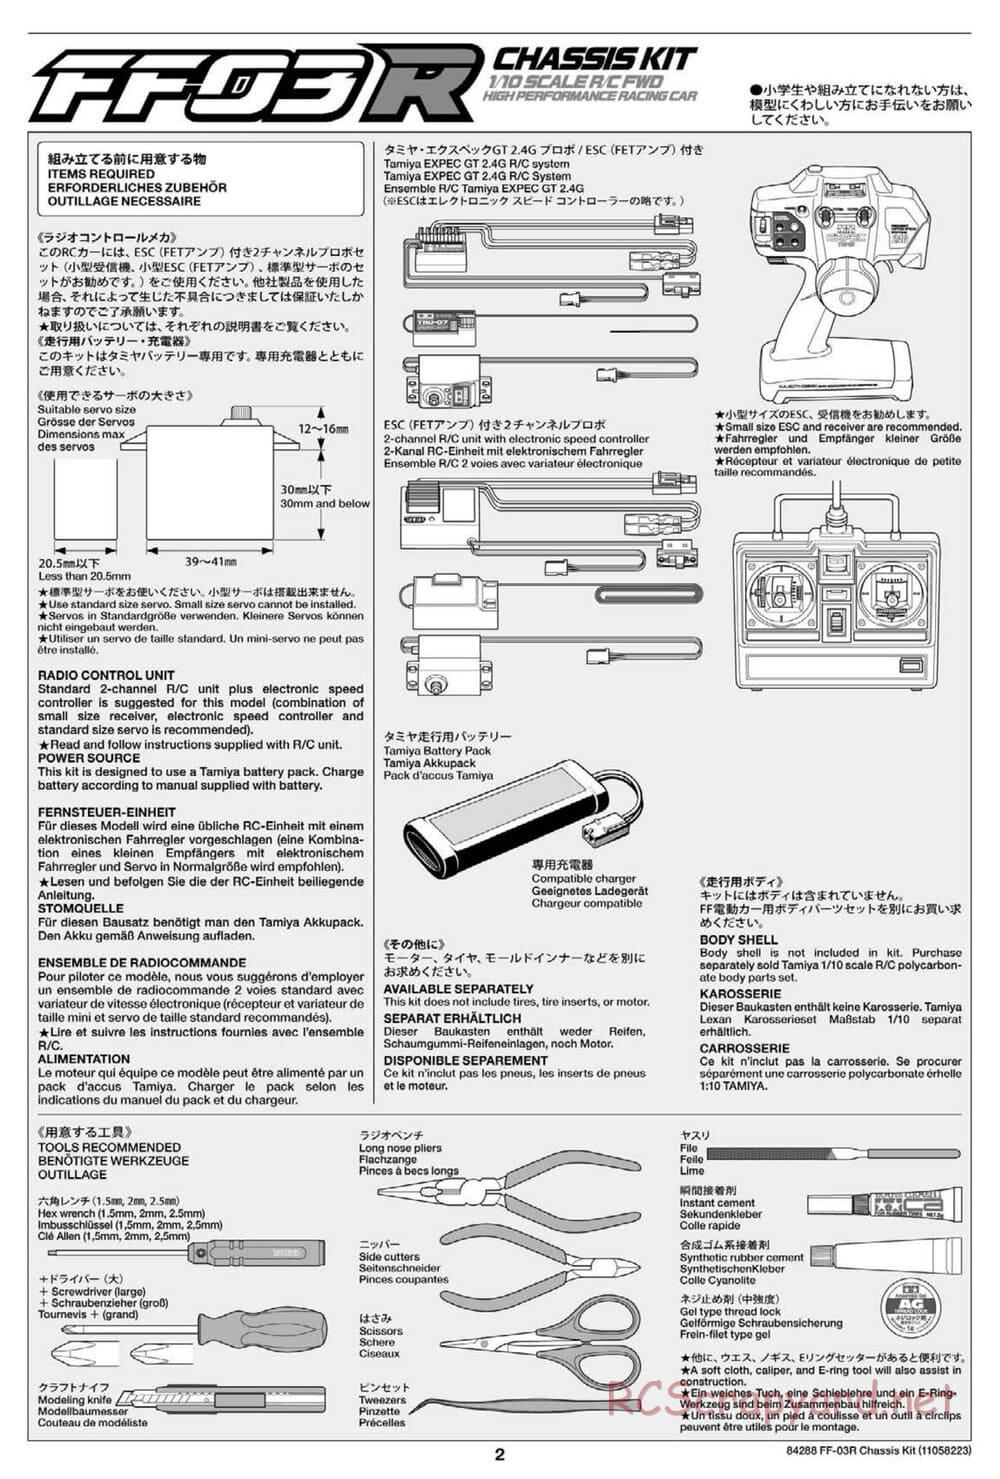 Tamiya - FF-03R Chassis - Manual - Page 4